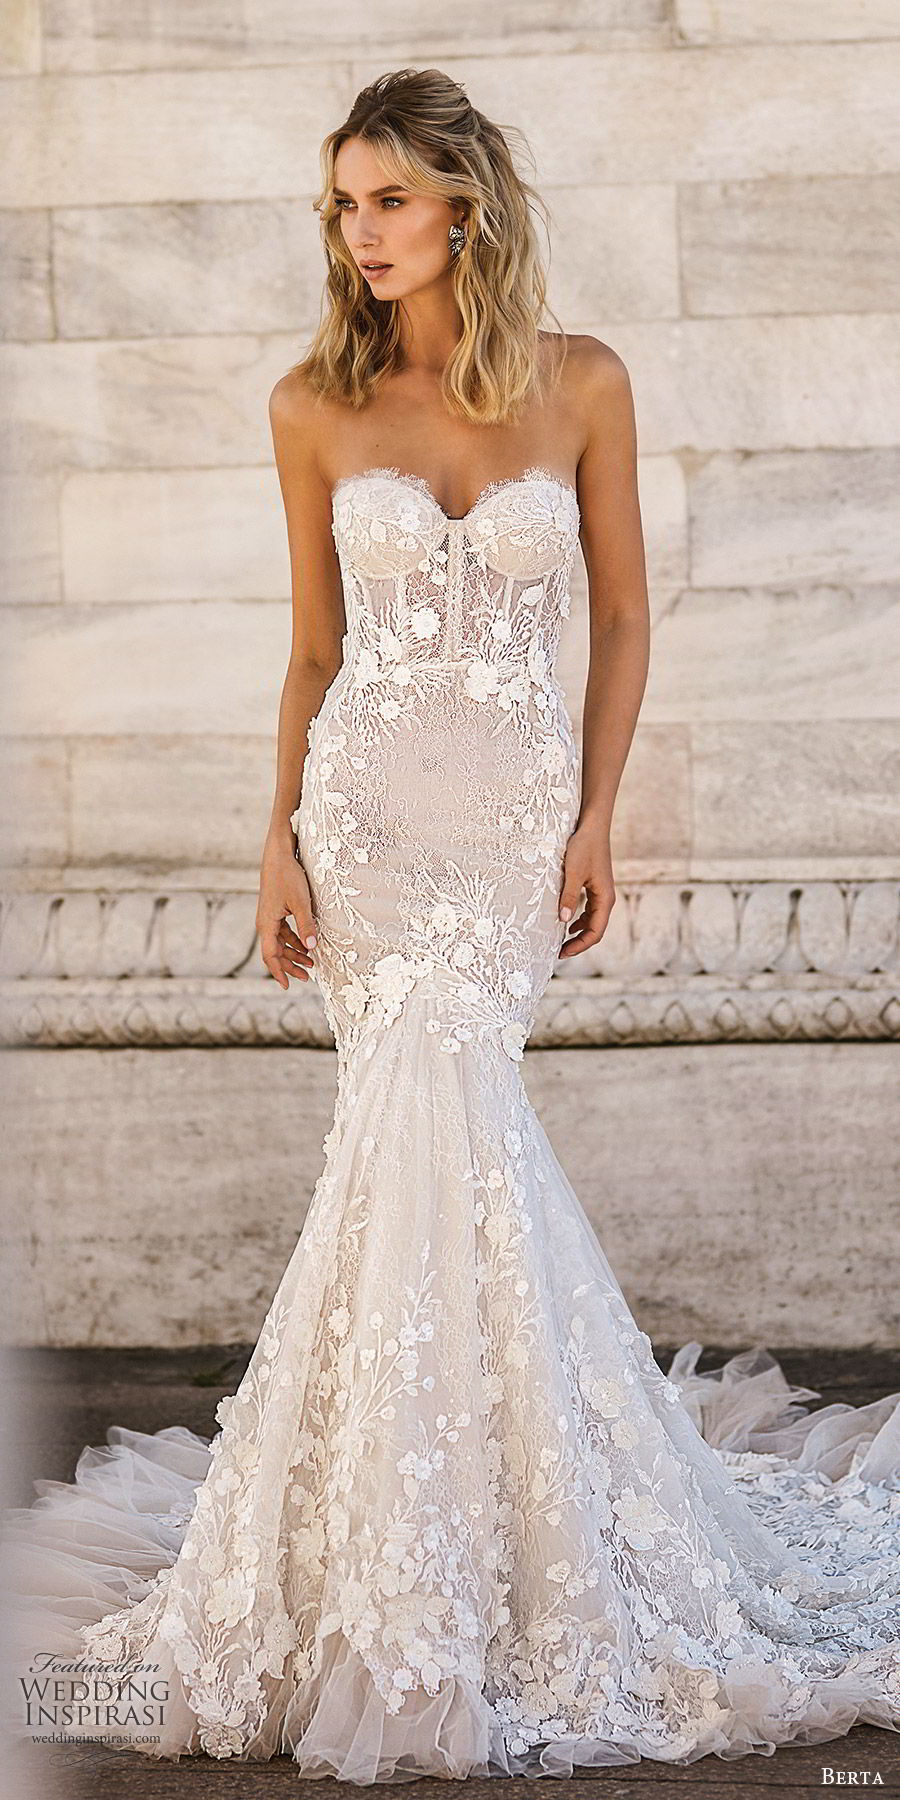 Berta Spring 2020 Wedding Dresses — “milano” Bridal Collection Wedding Inspirasi